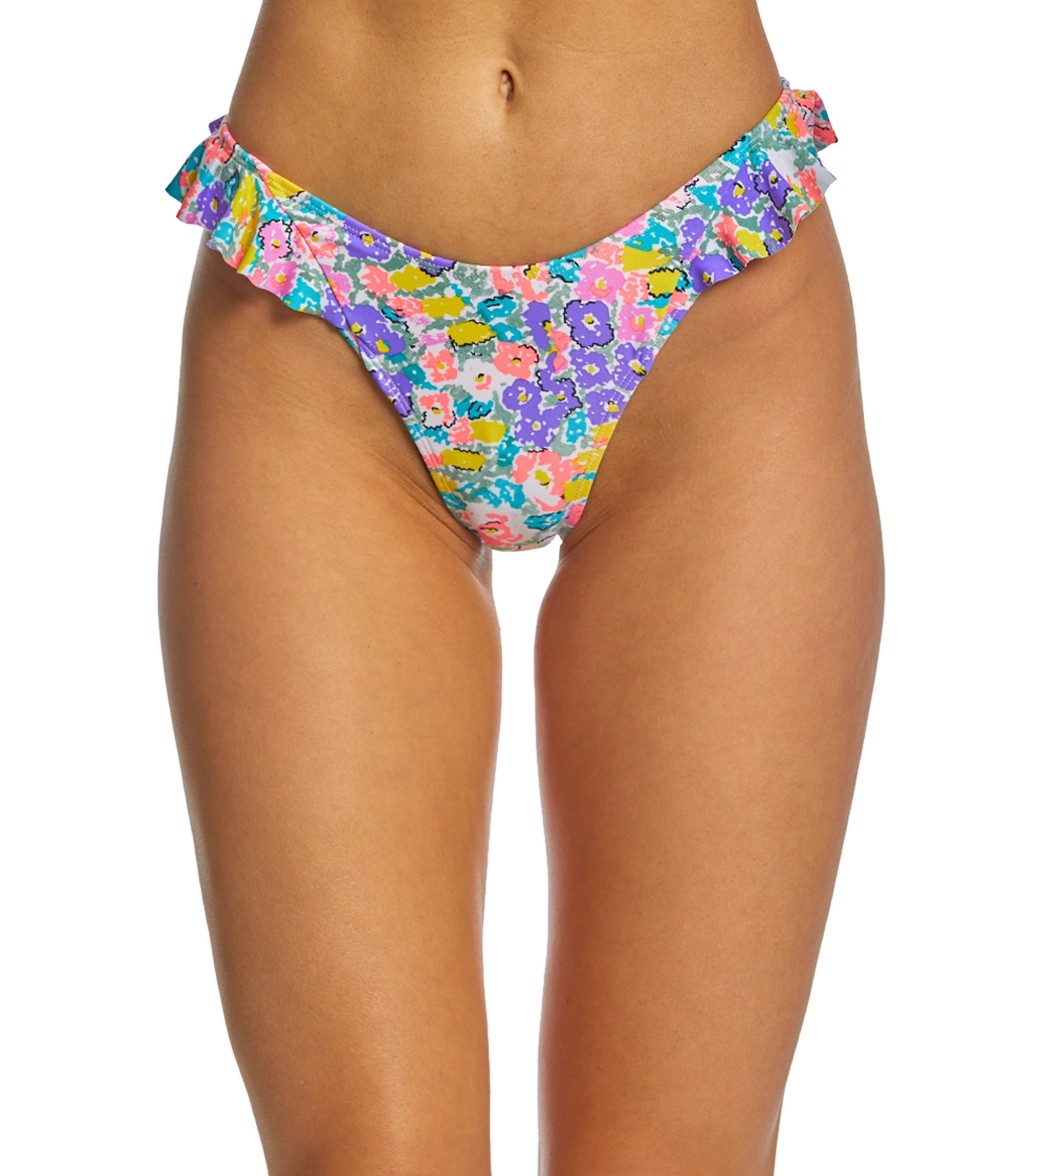 Body Glove Vogue Hold On High Hip Bikini Bottom - Multi Medium - Swimoutlet.com